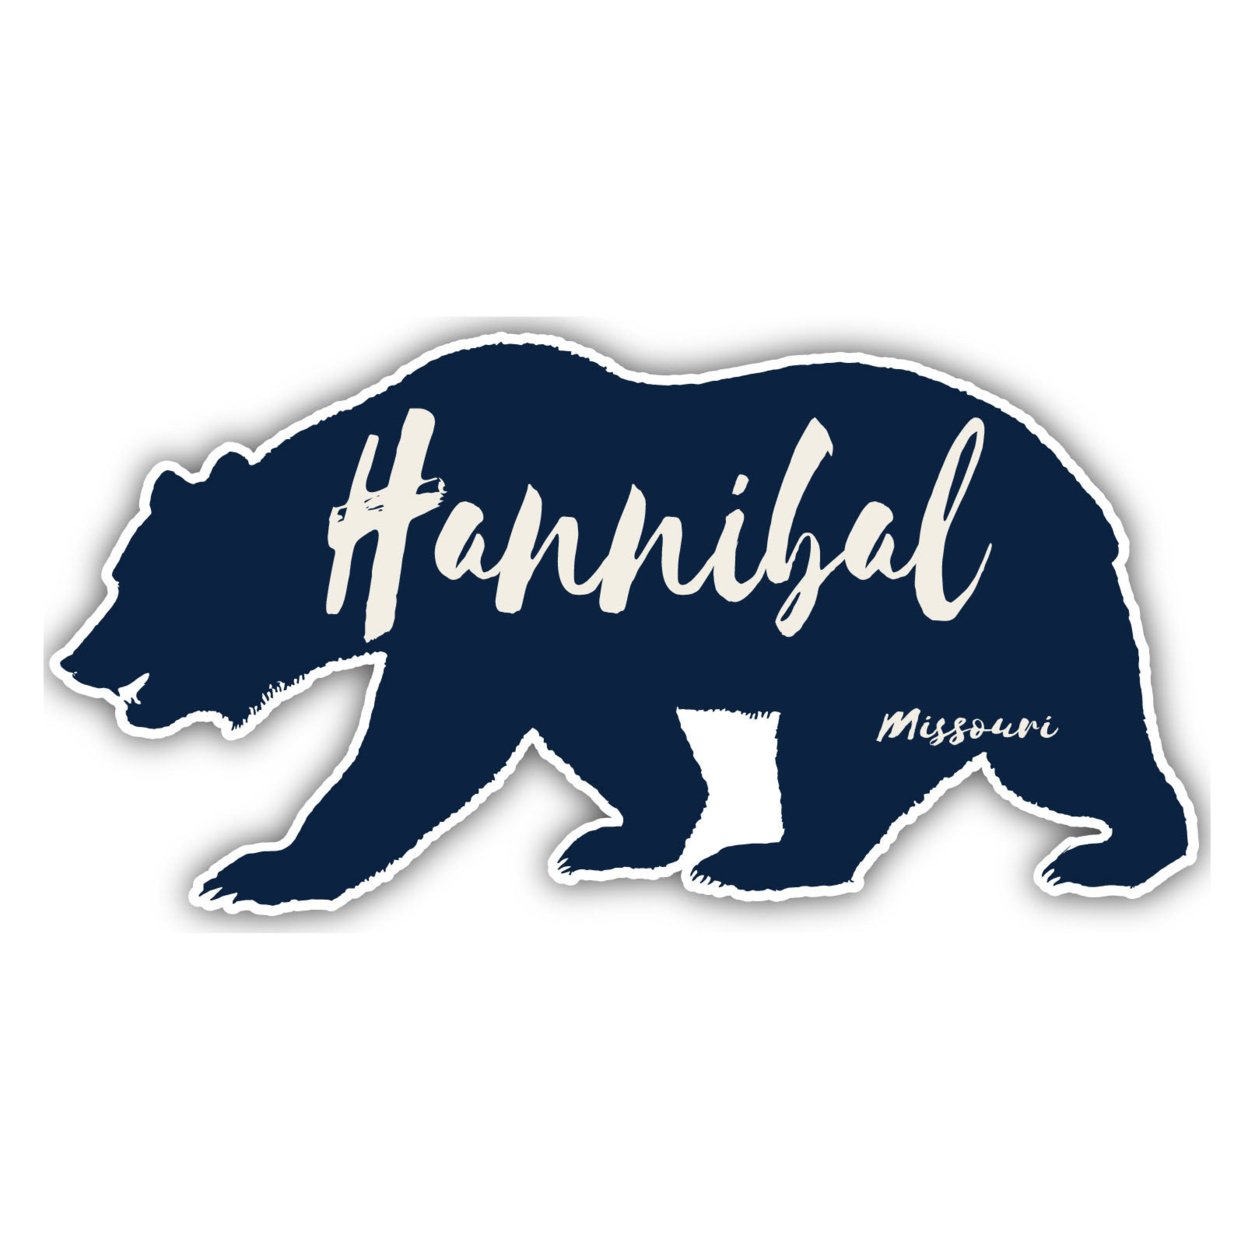 Hannibal Missouri Souvenir Decorative Stickers (Choose Theme And Size) - 4-Pack, 8-Inch, Bear